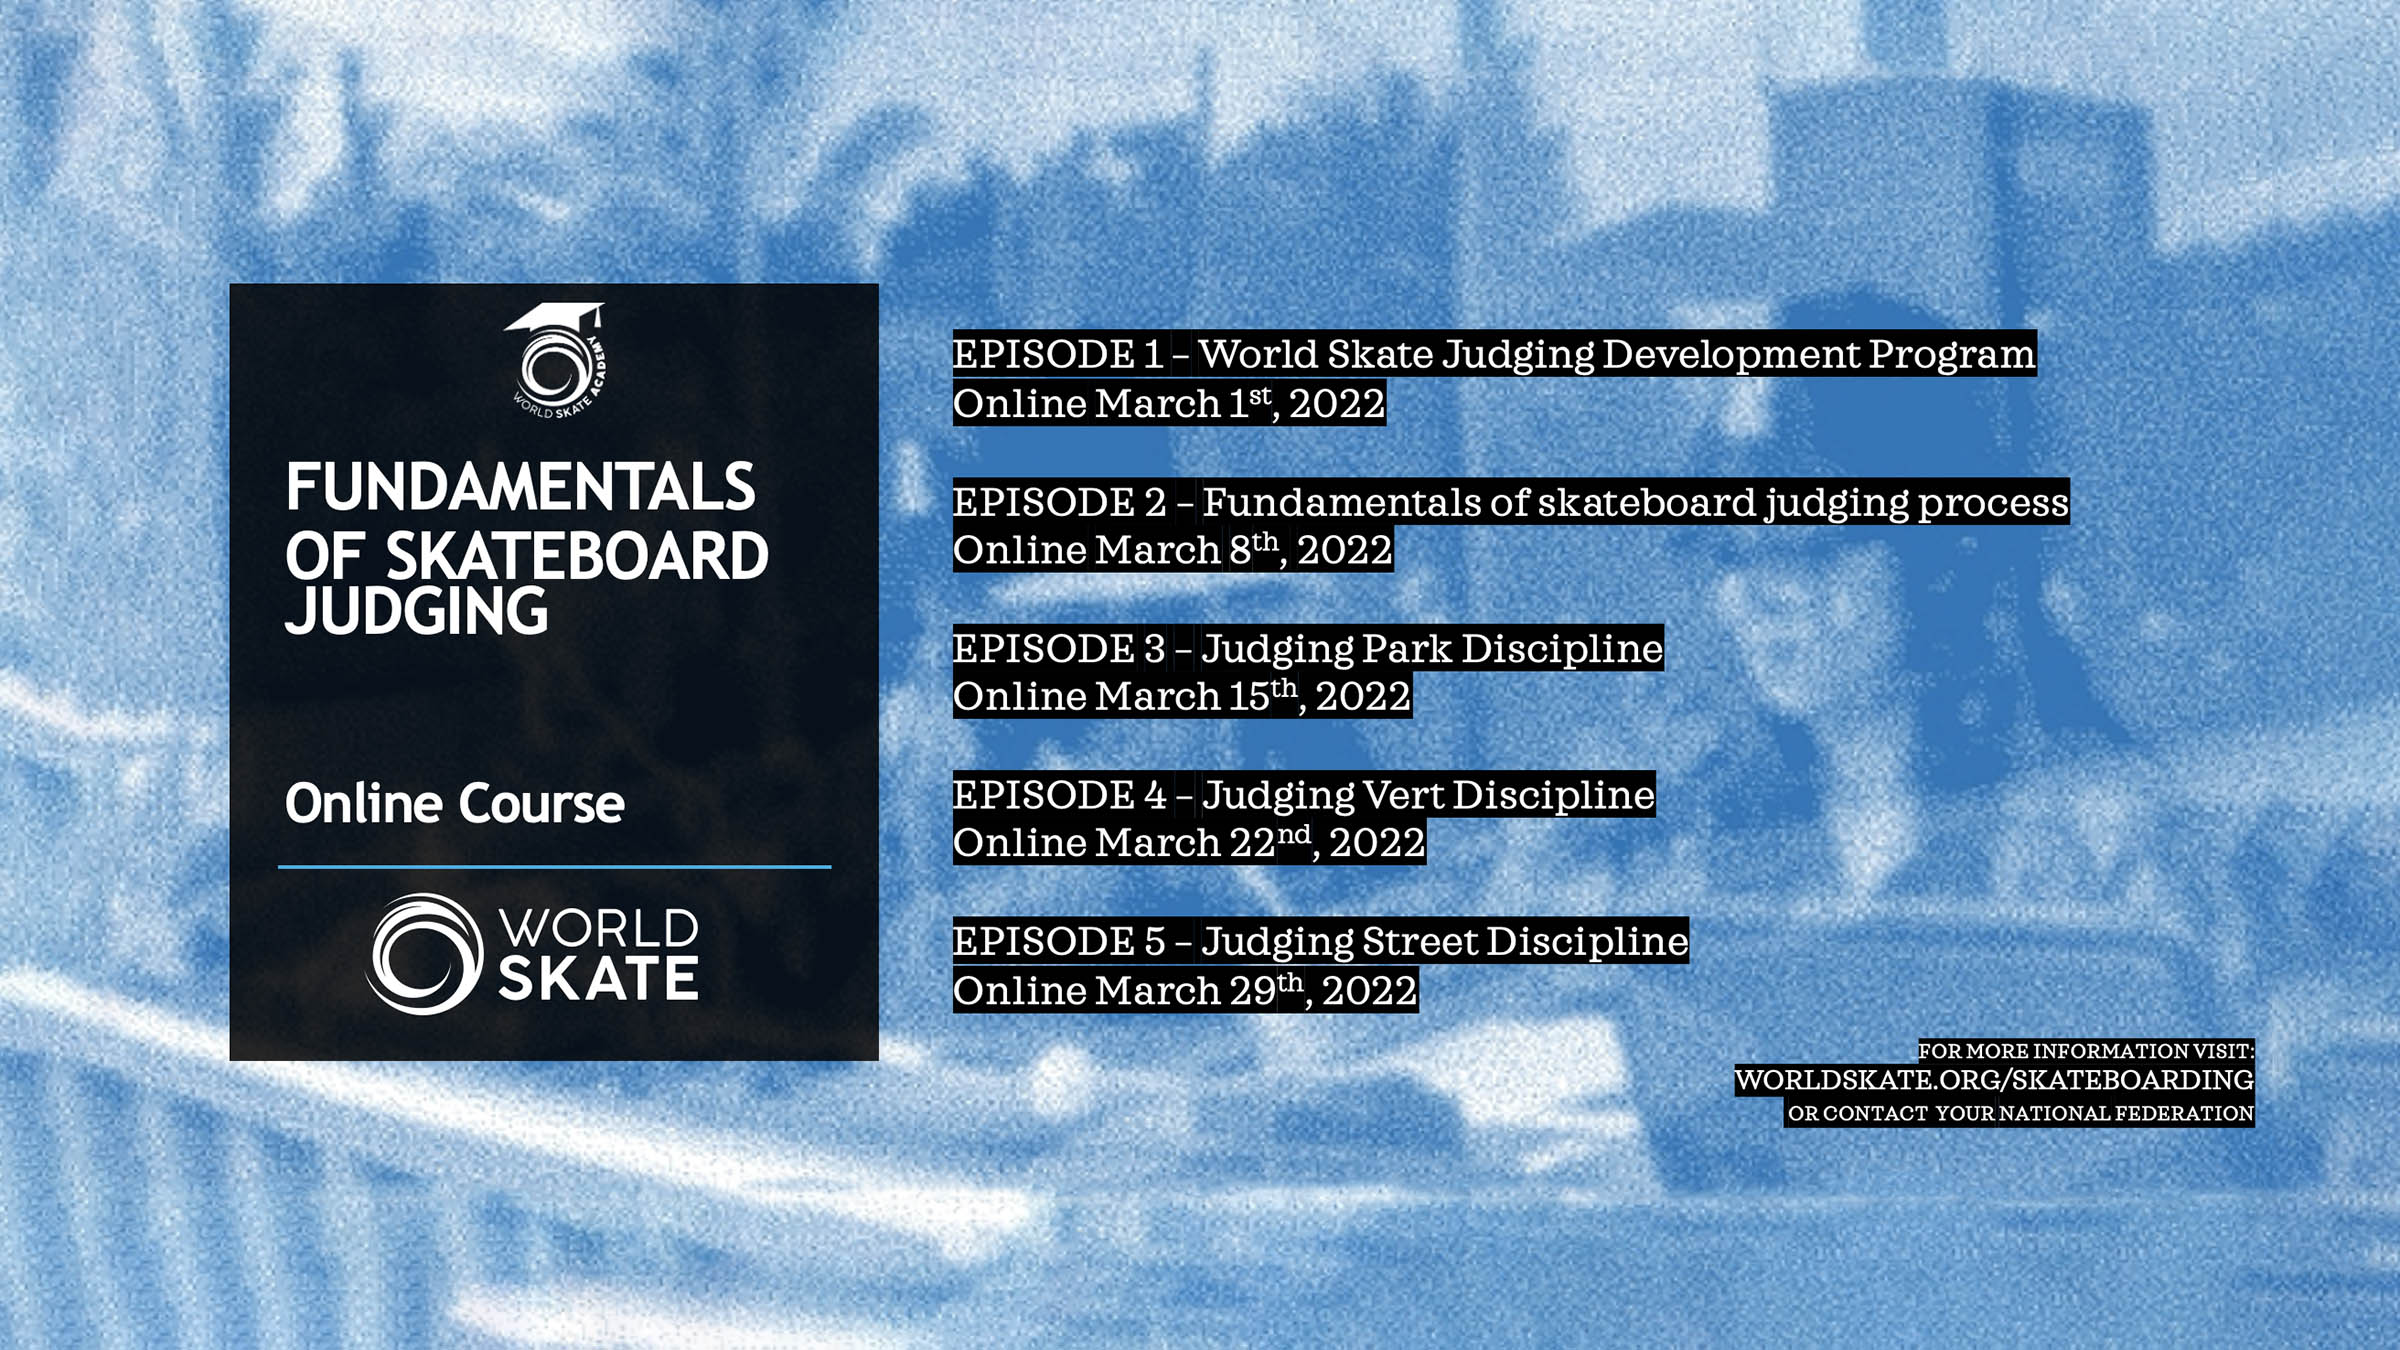 images/Skateboard_Judging_E-Learning/FUNDAMENTALS_OF_SKATEBOARD_JUDGING_BANNER_COLORS_BLUE_CHAPTERS.jpg